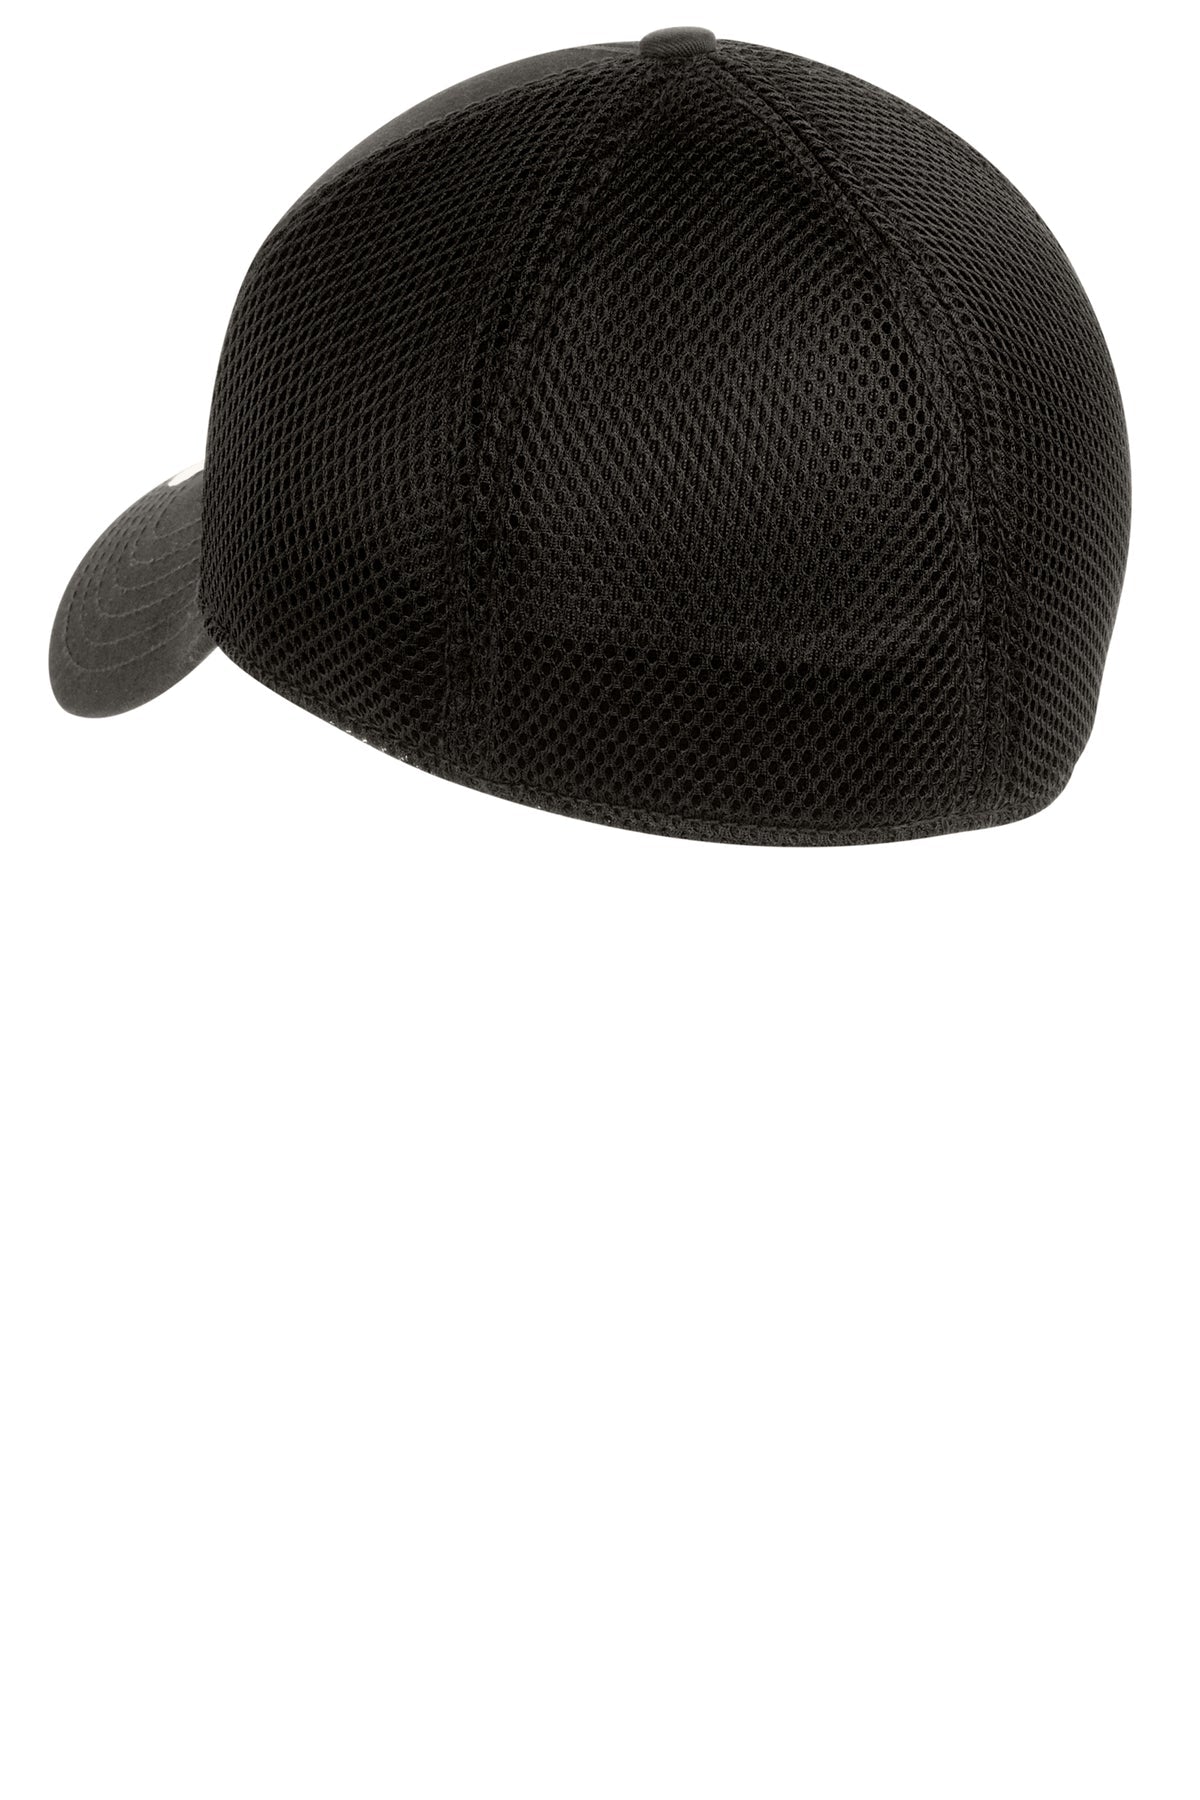 New Era Stretch Mesh Customized Caps, Black